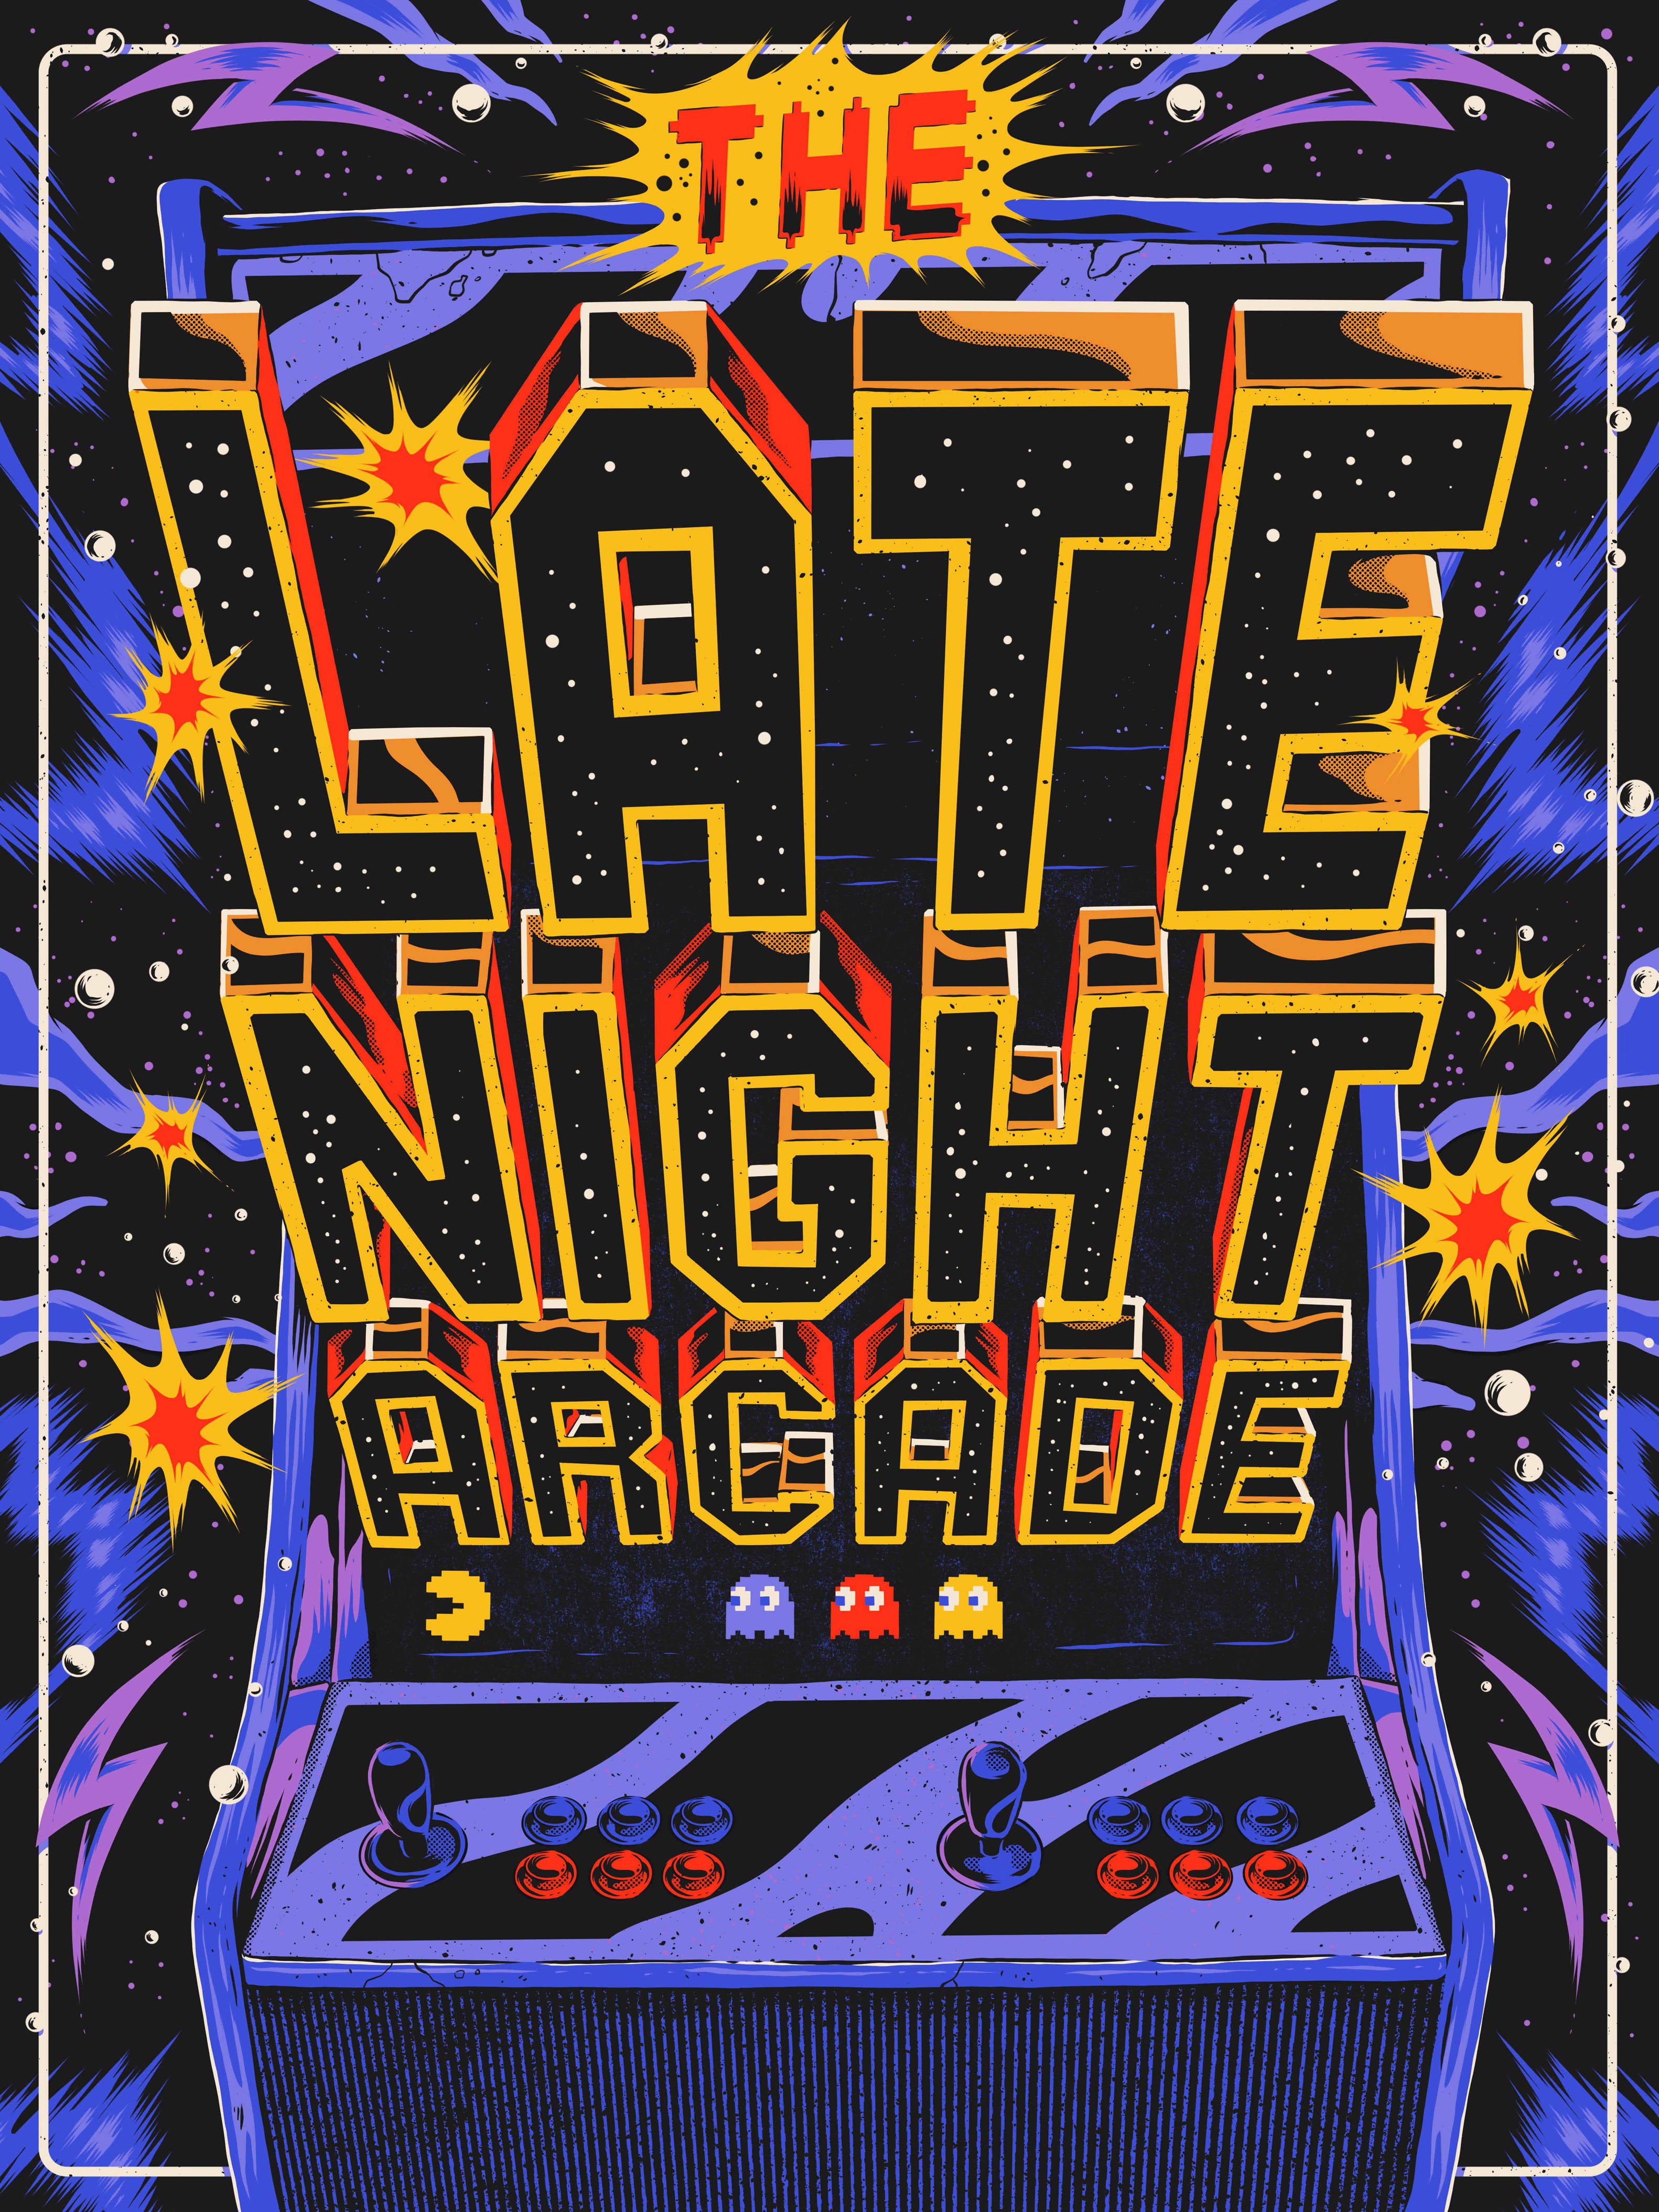 the late night arcade